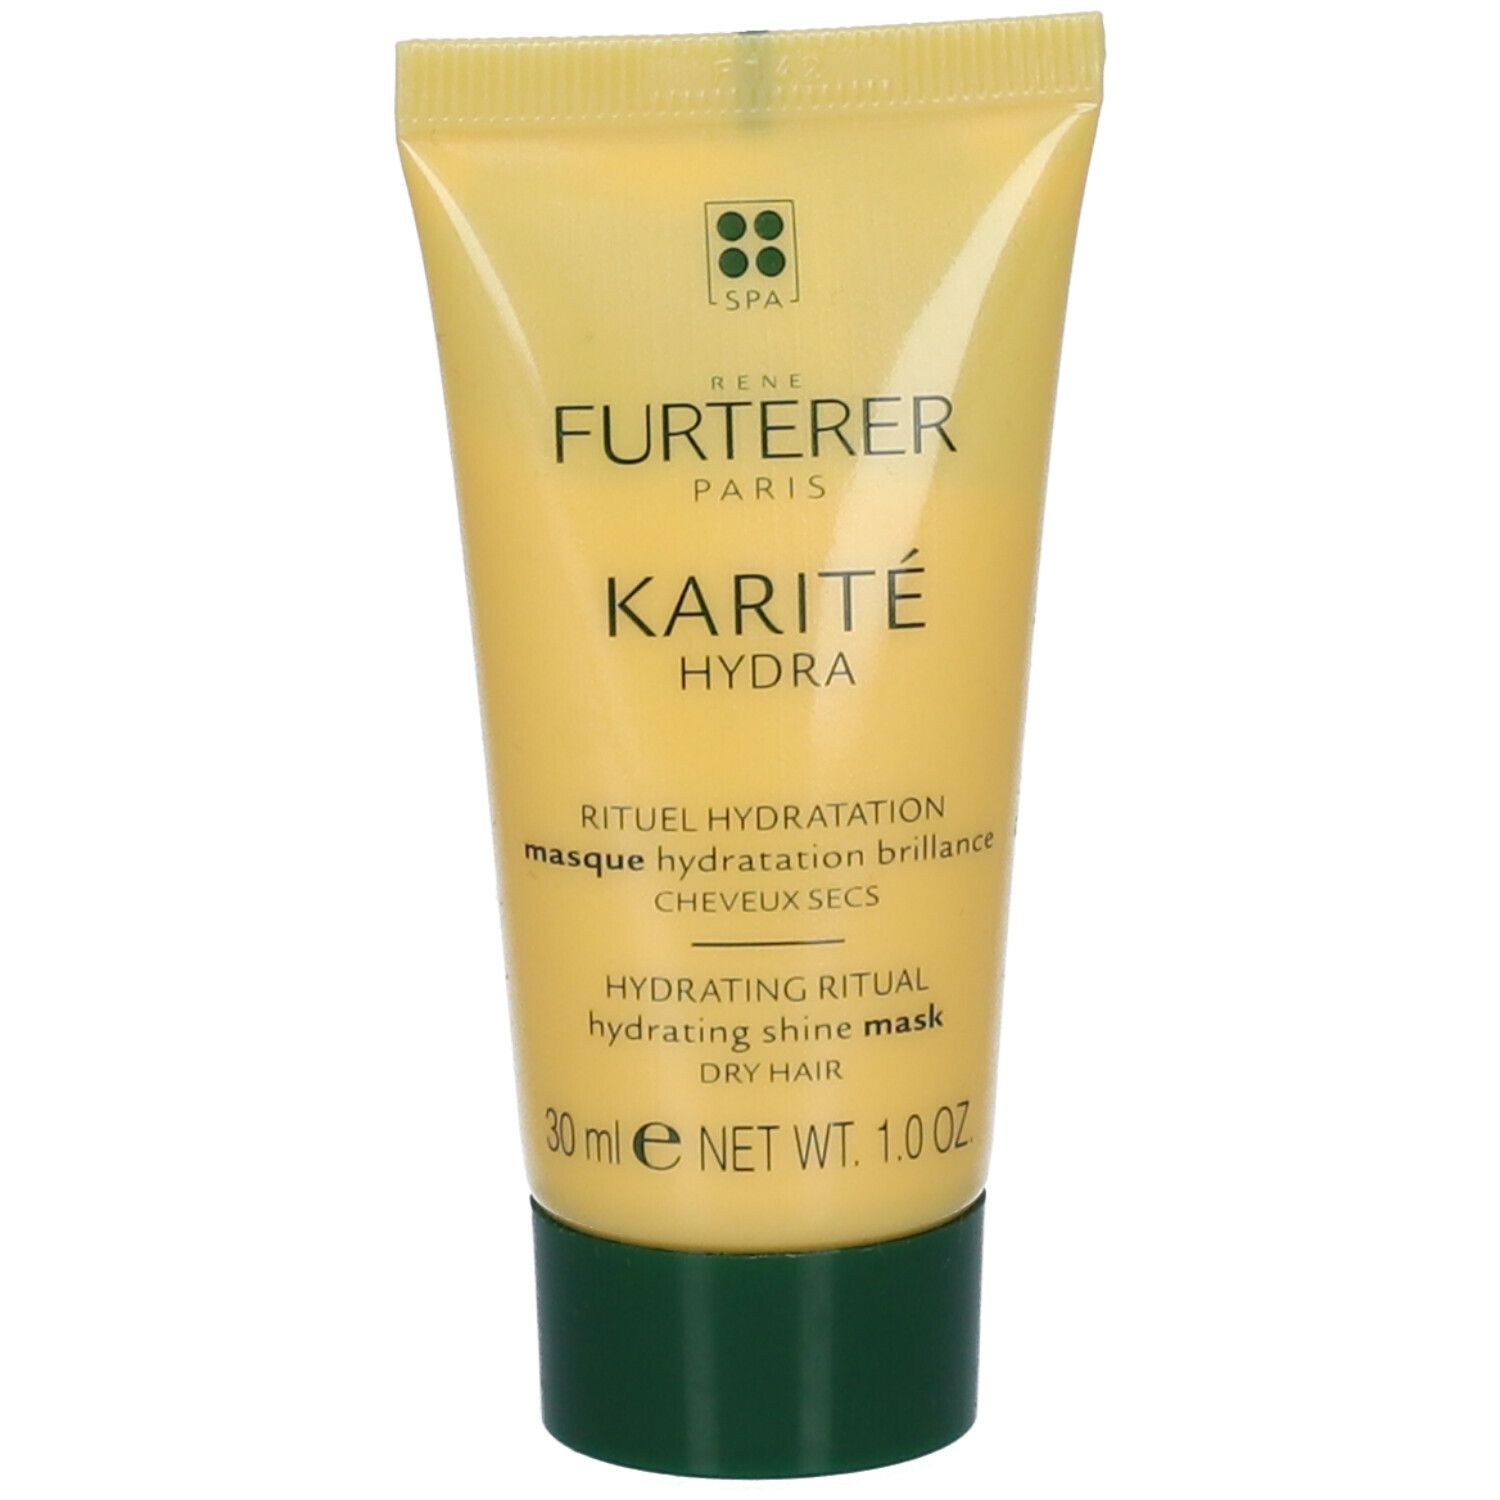 Rene Furterer Karité Hydra masque hydratation brillance